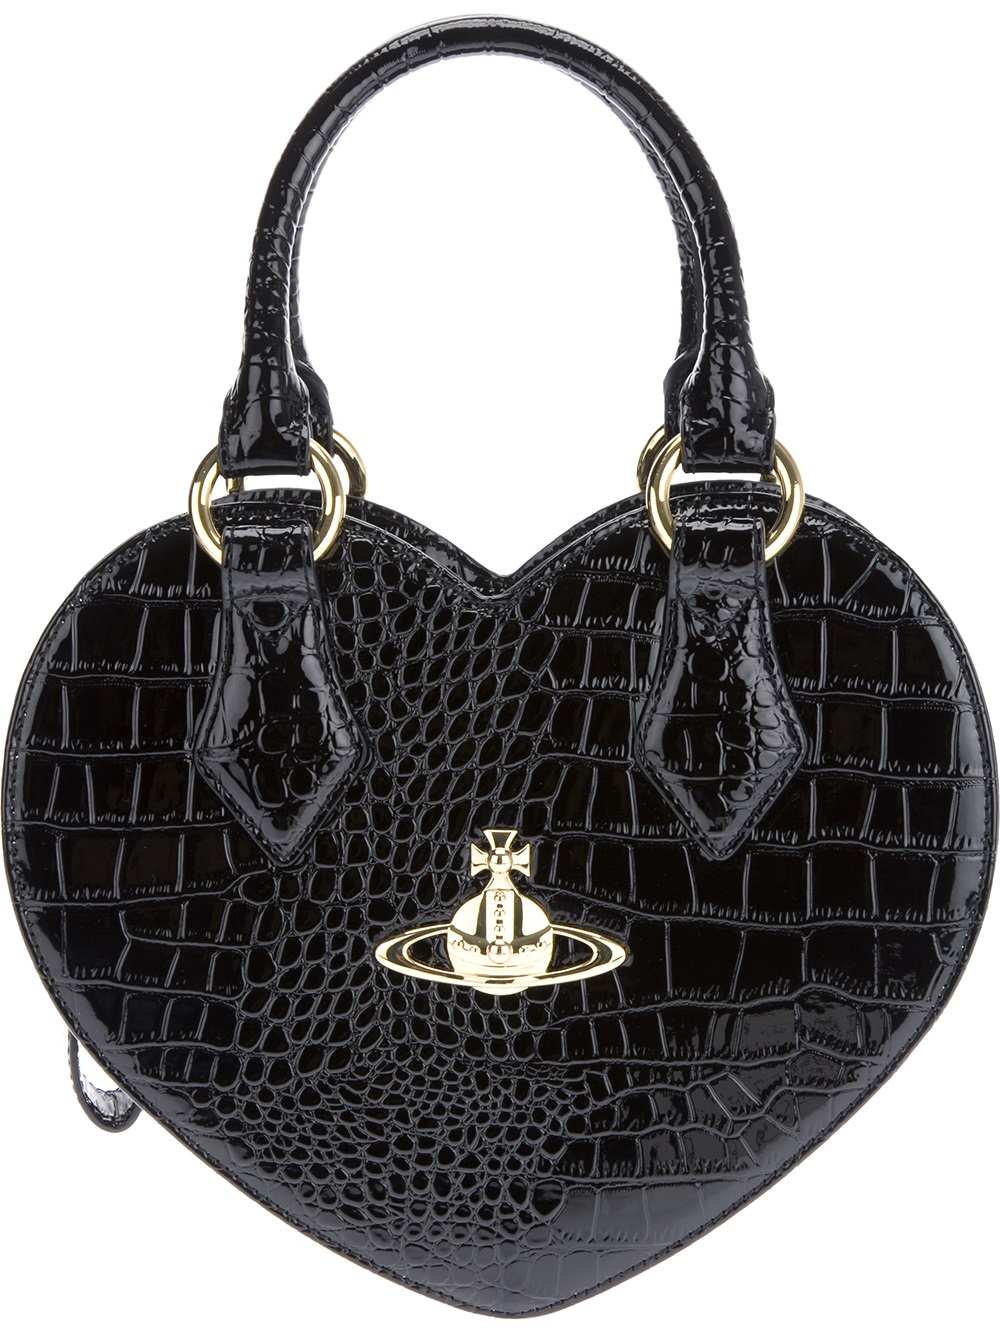 Vivienne Westwood Chancery Heart Bag in Black - Lyst